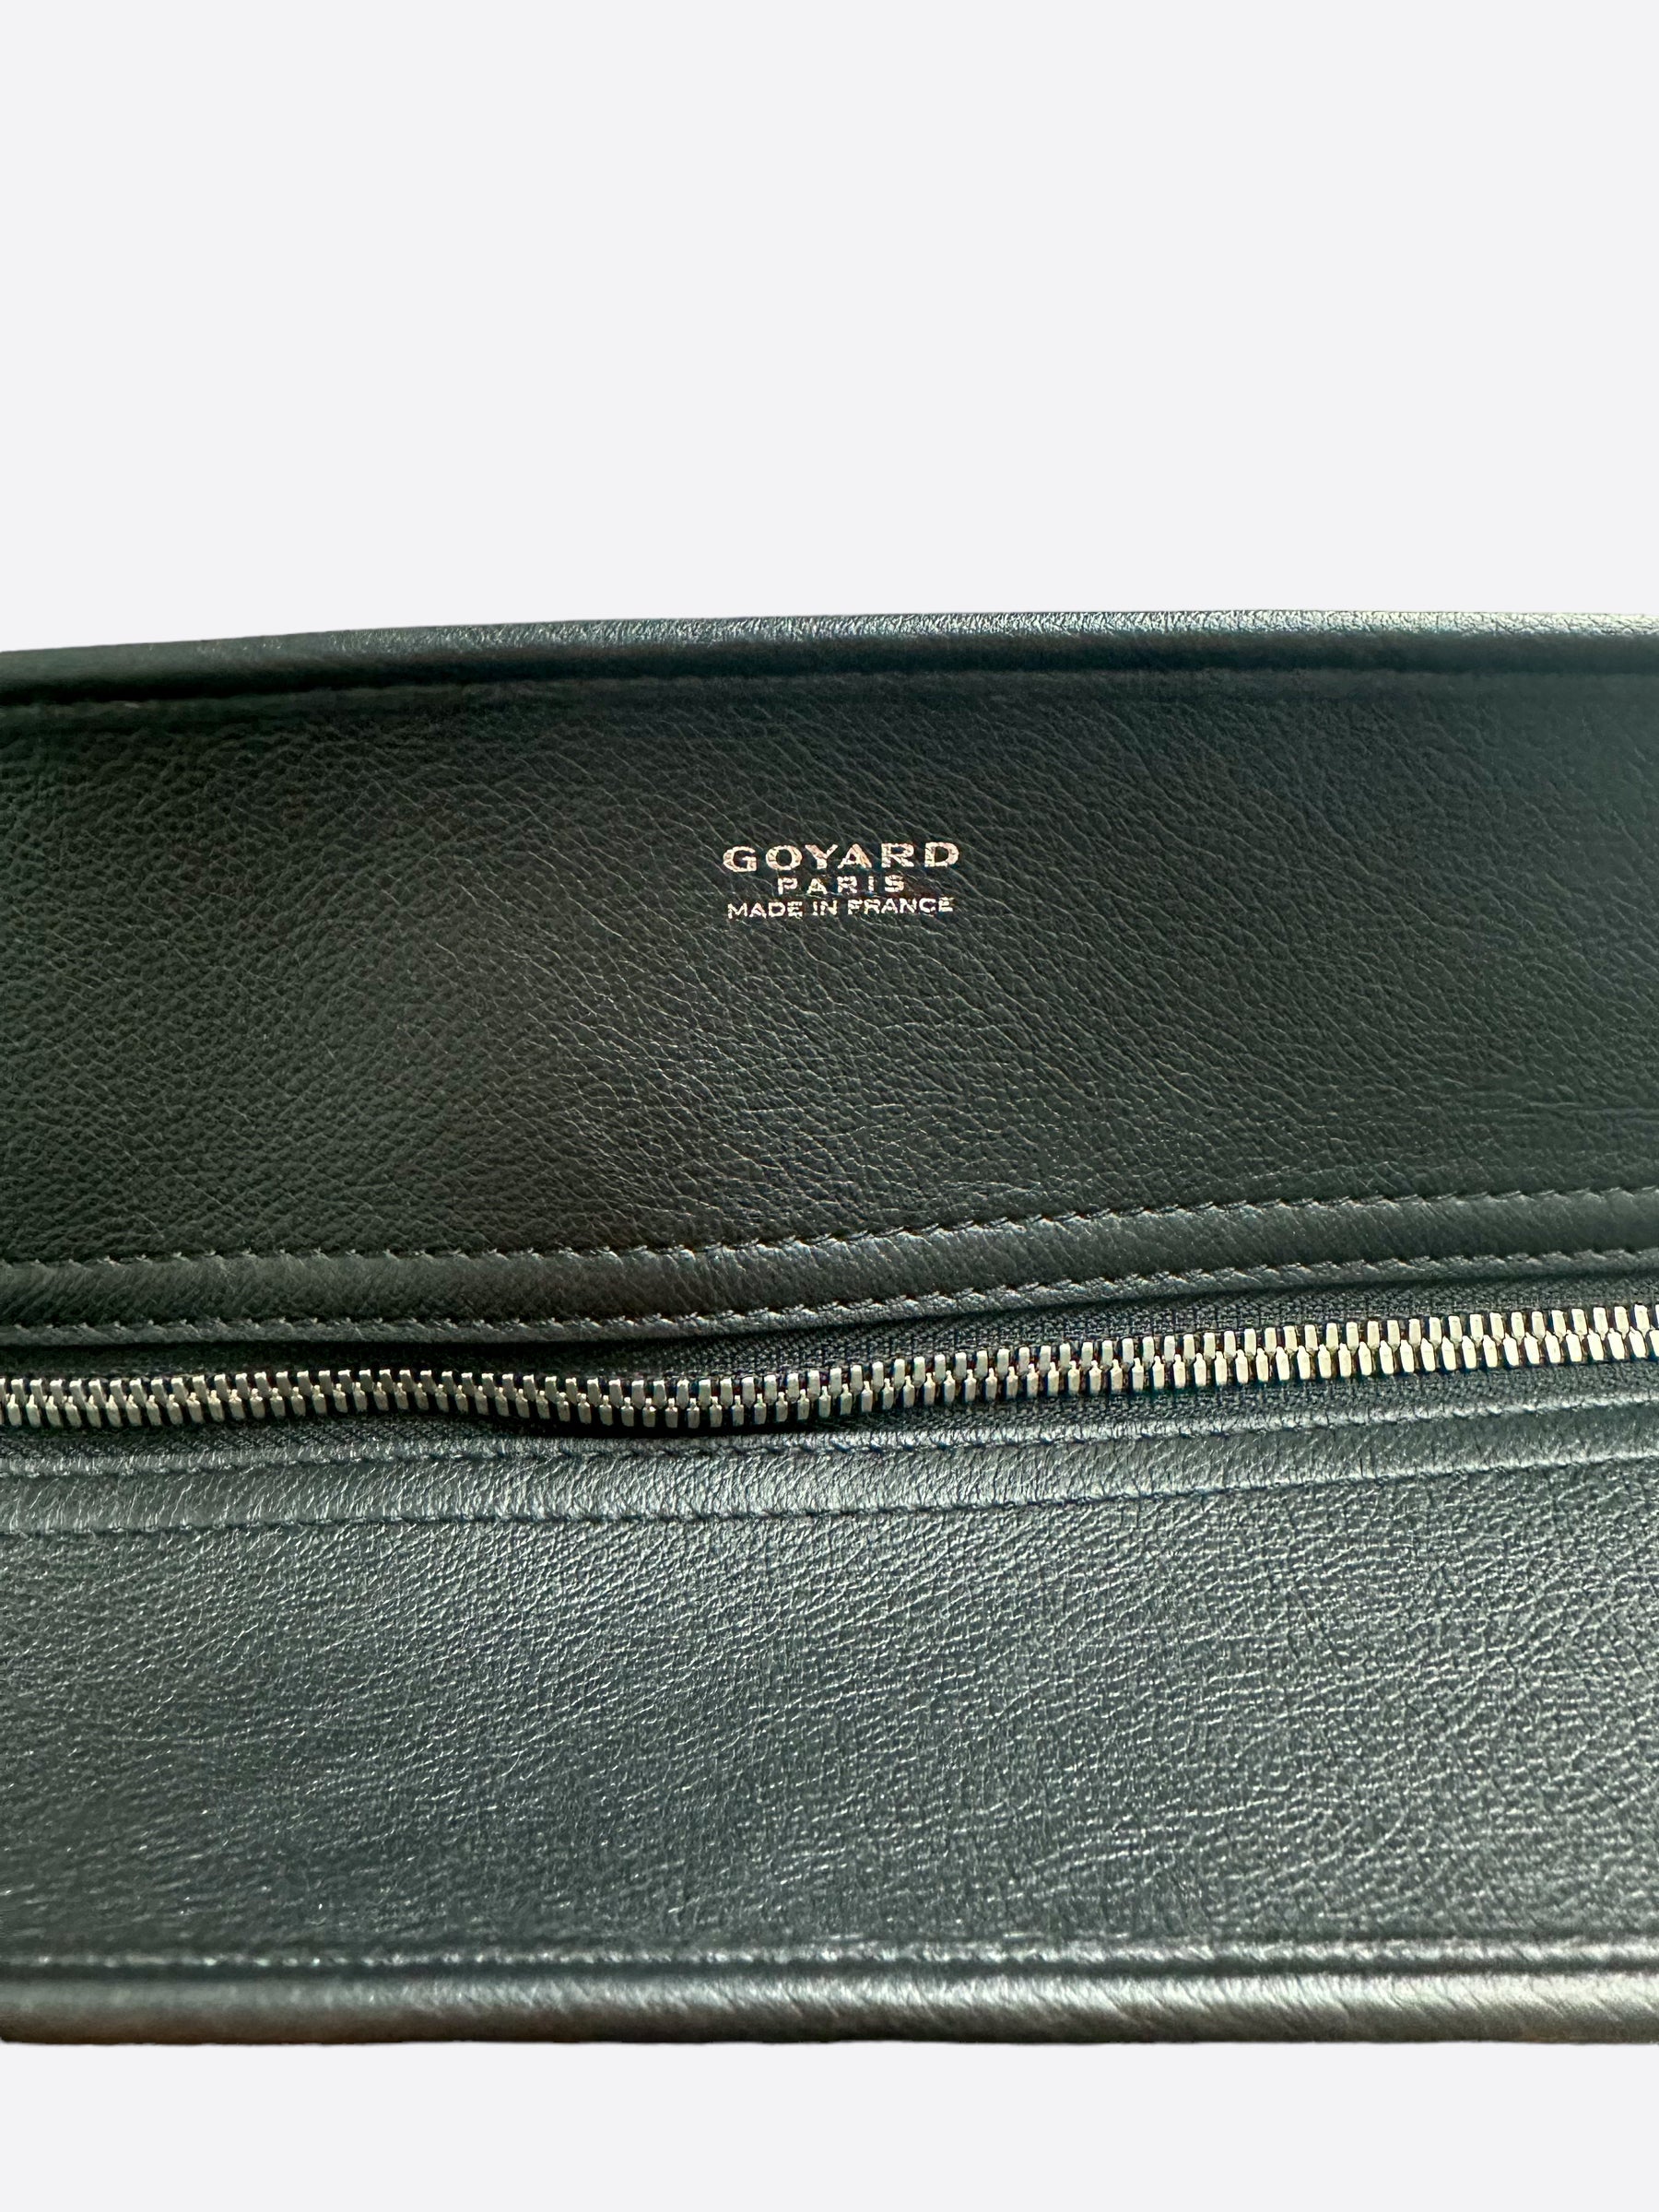 Goyard Pre-owned Women's Leather Wallet - Grey - One Size